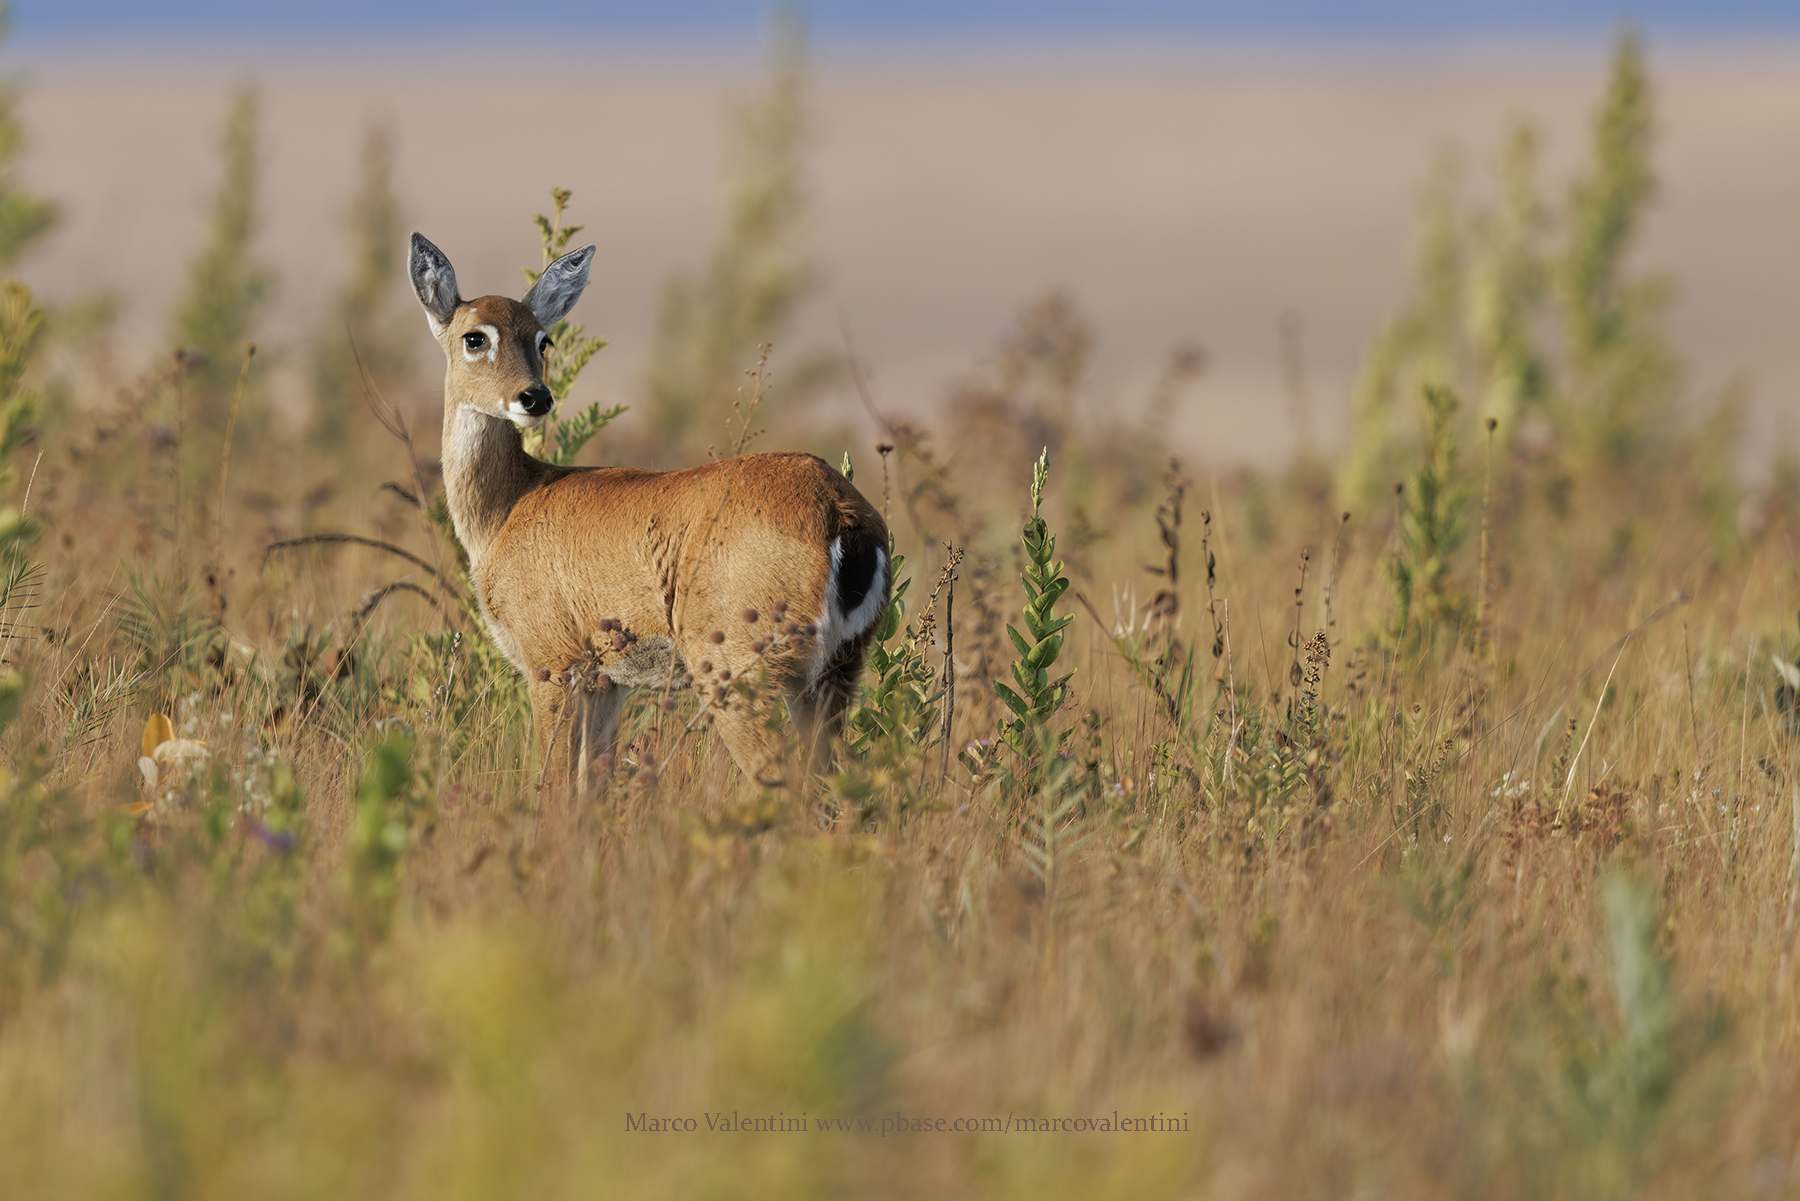 Pampas deer - Ozotoceros bezoarticus